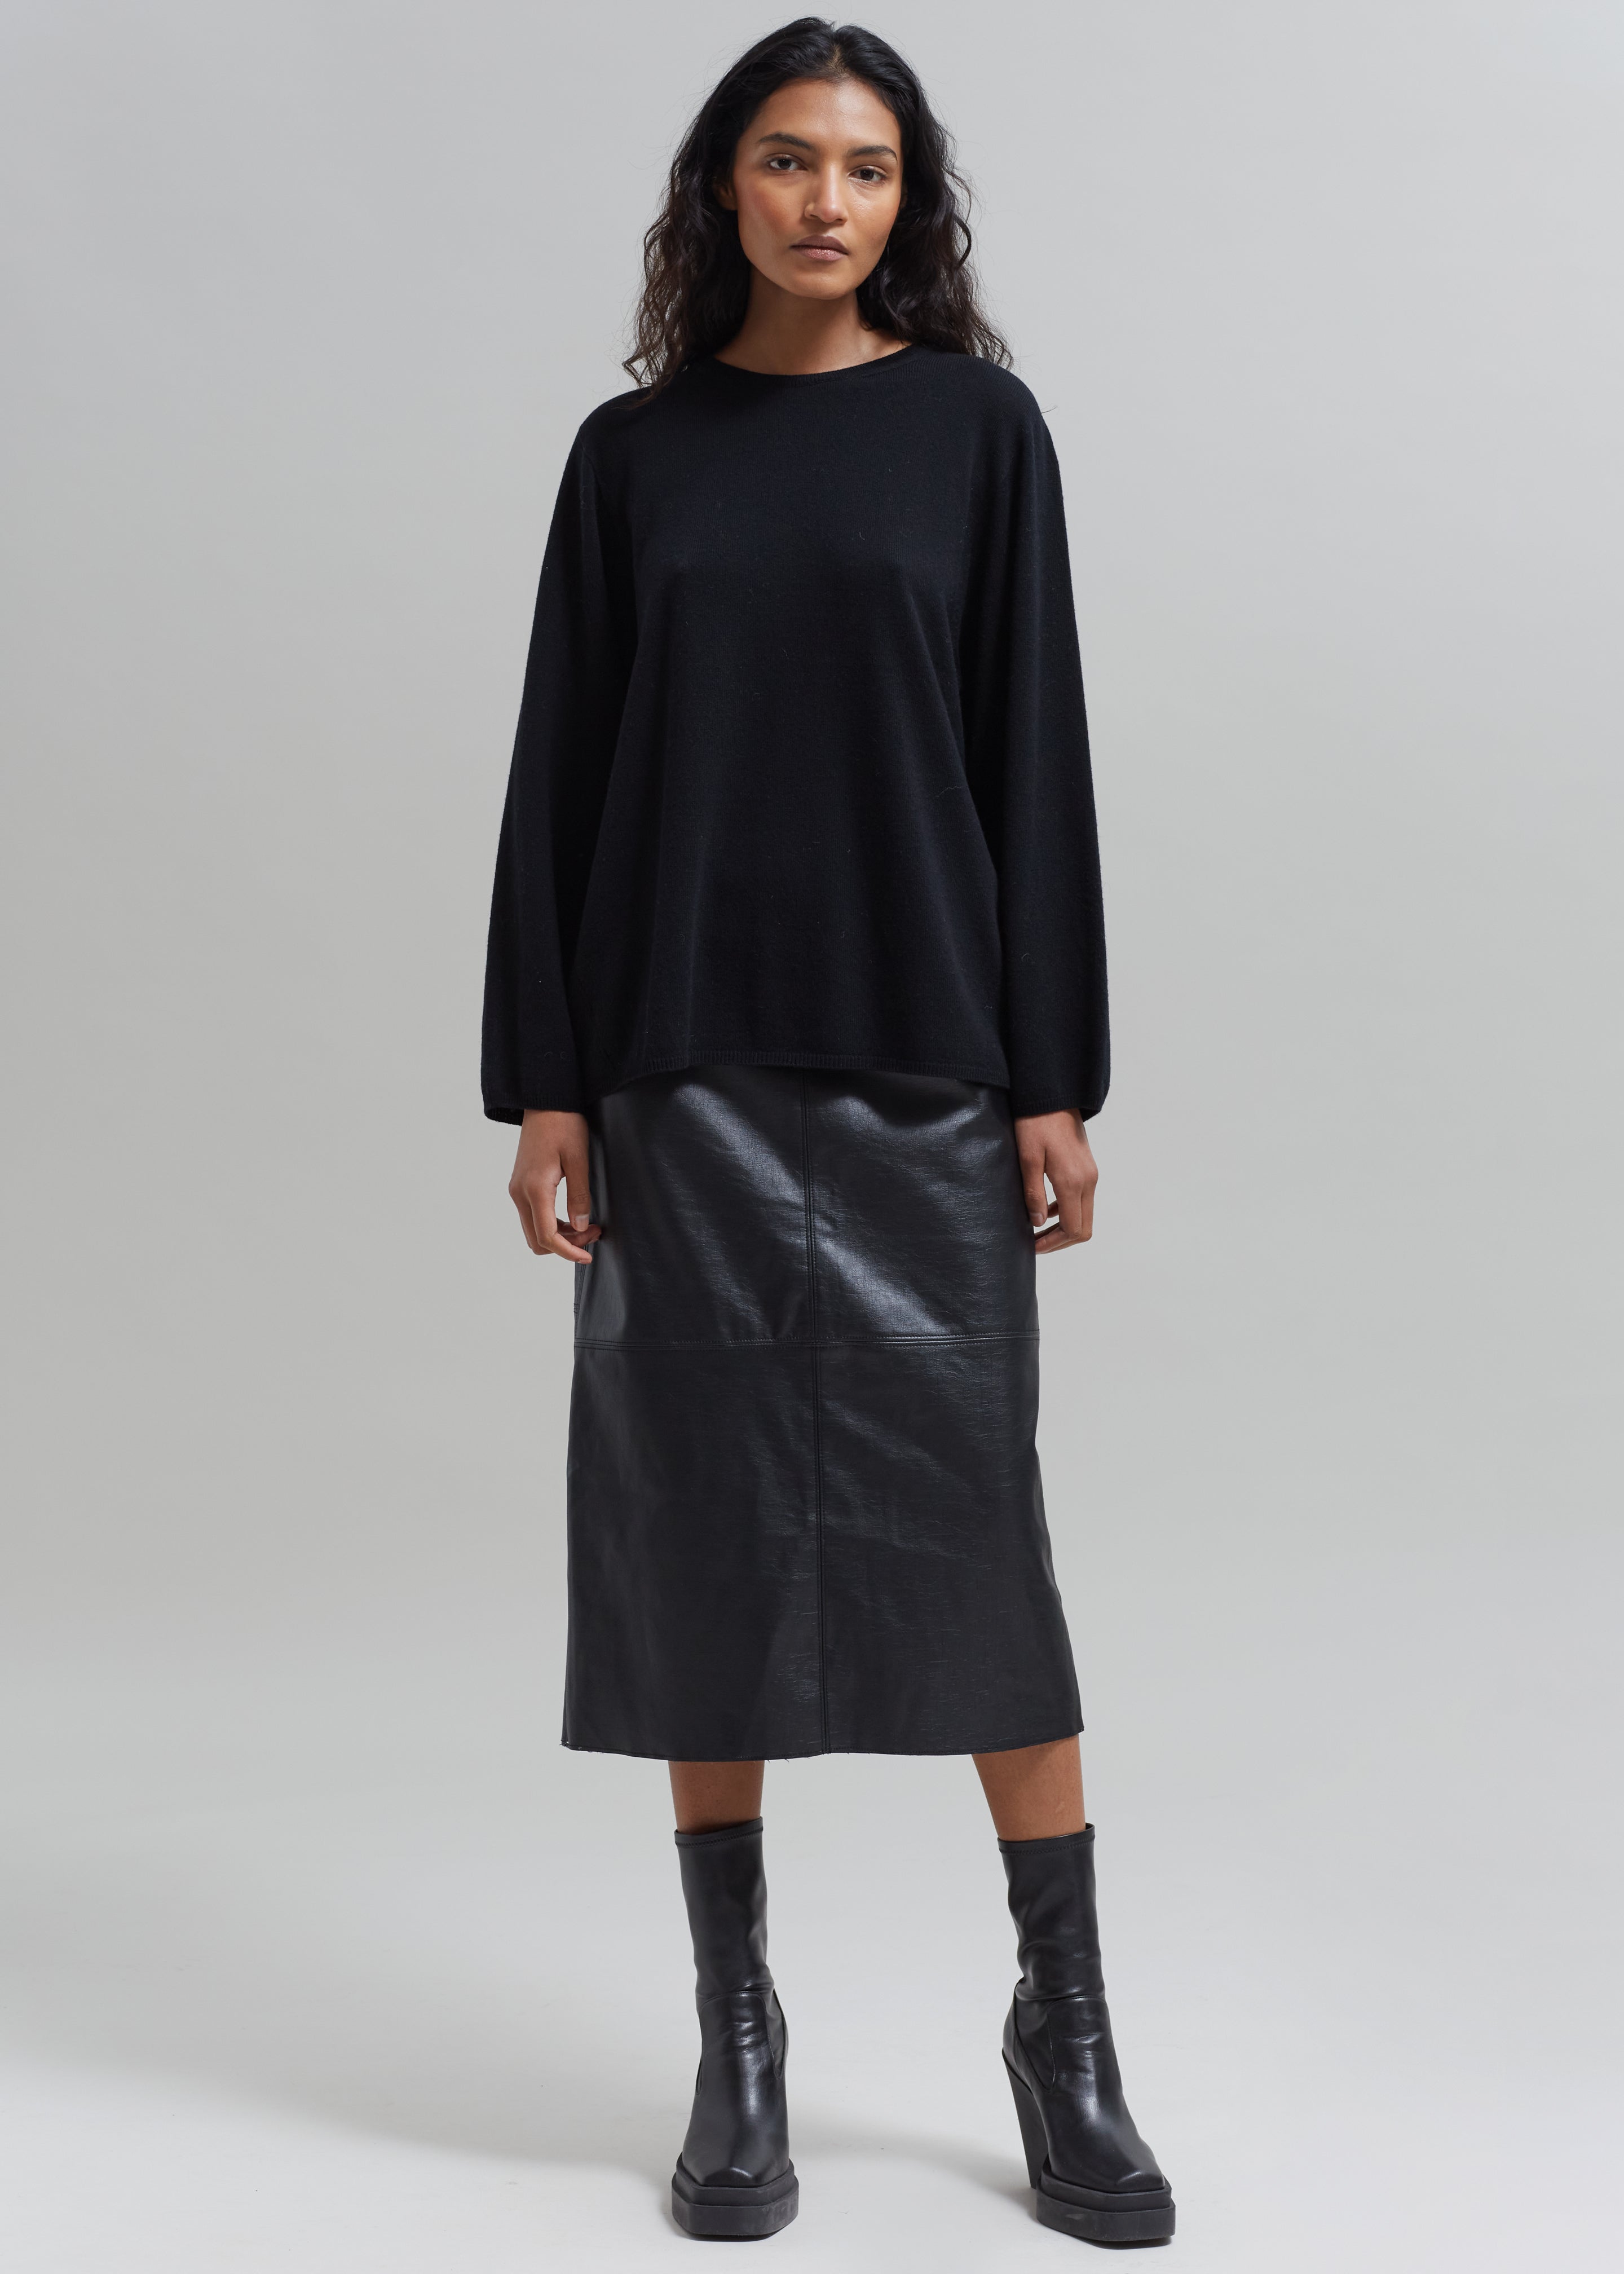 Manyne Faux Leather Pencil Skirt - Black - 5